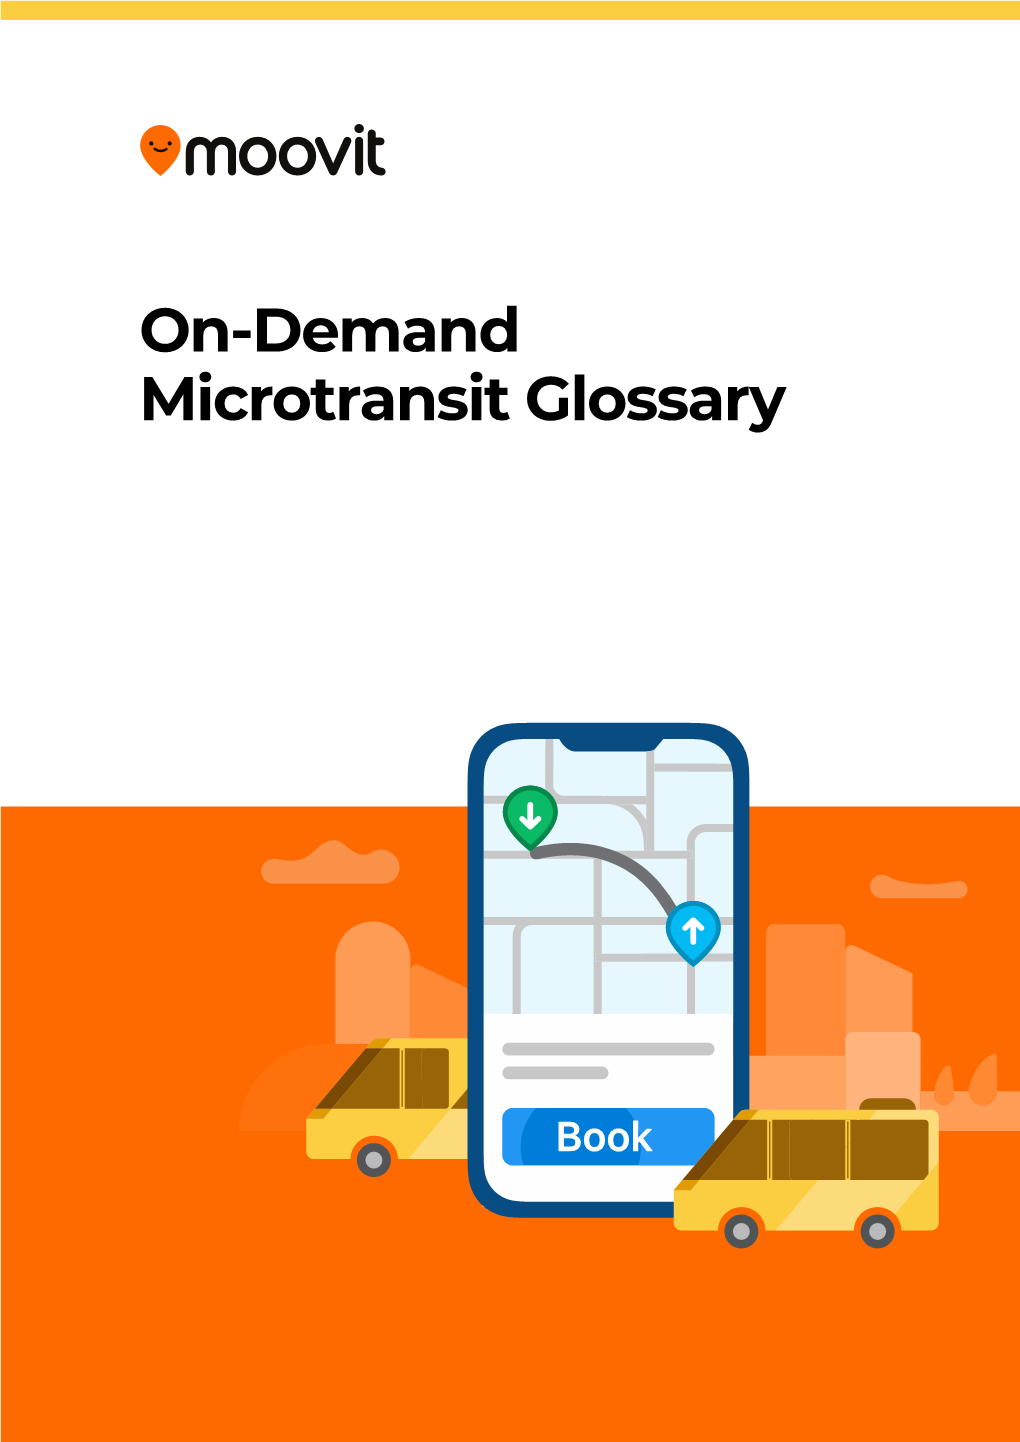 On-Demand Microtransit Glossary